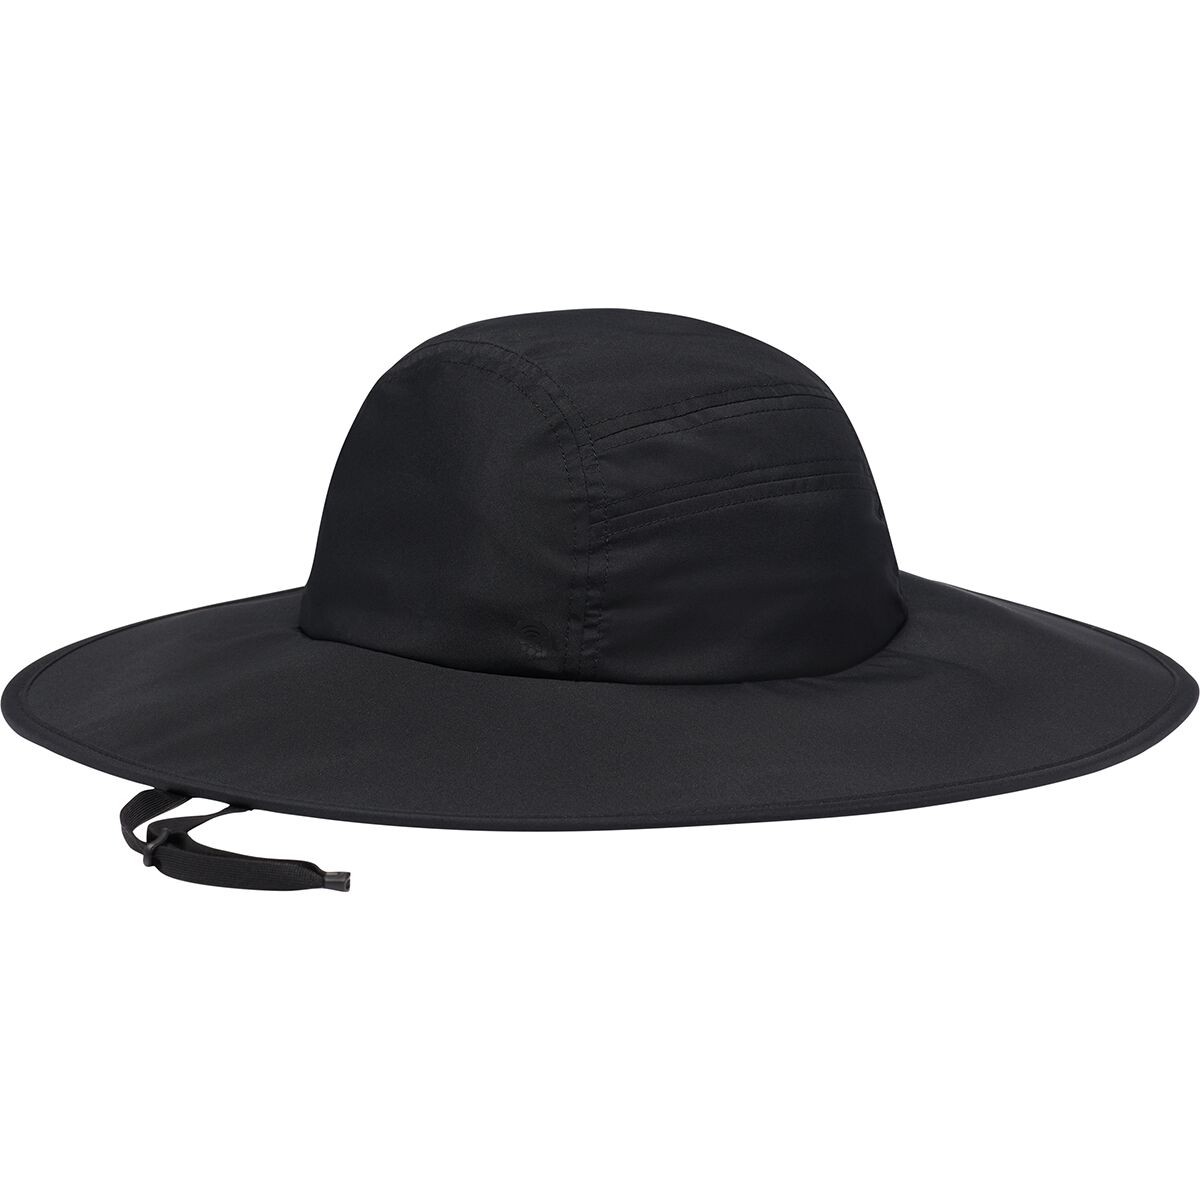 Mountain Hardwear Exposure/2 GORE-TEX Paclite Rain Hat